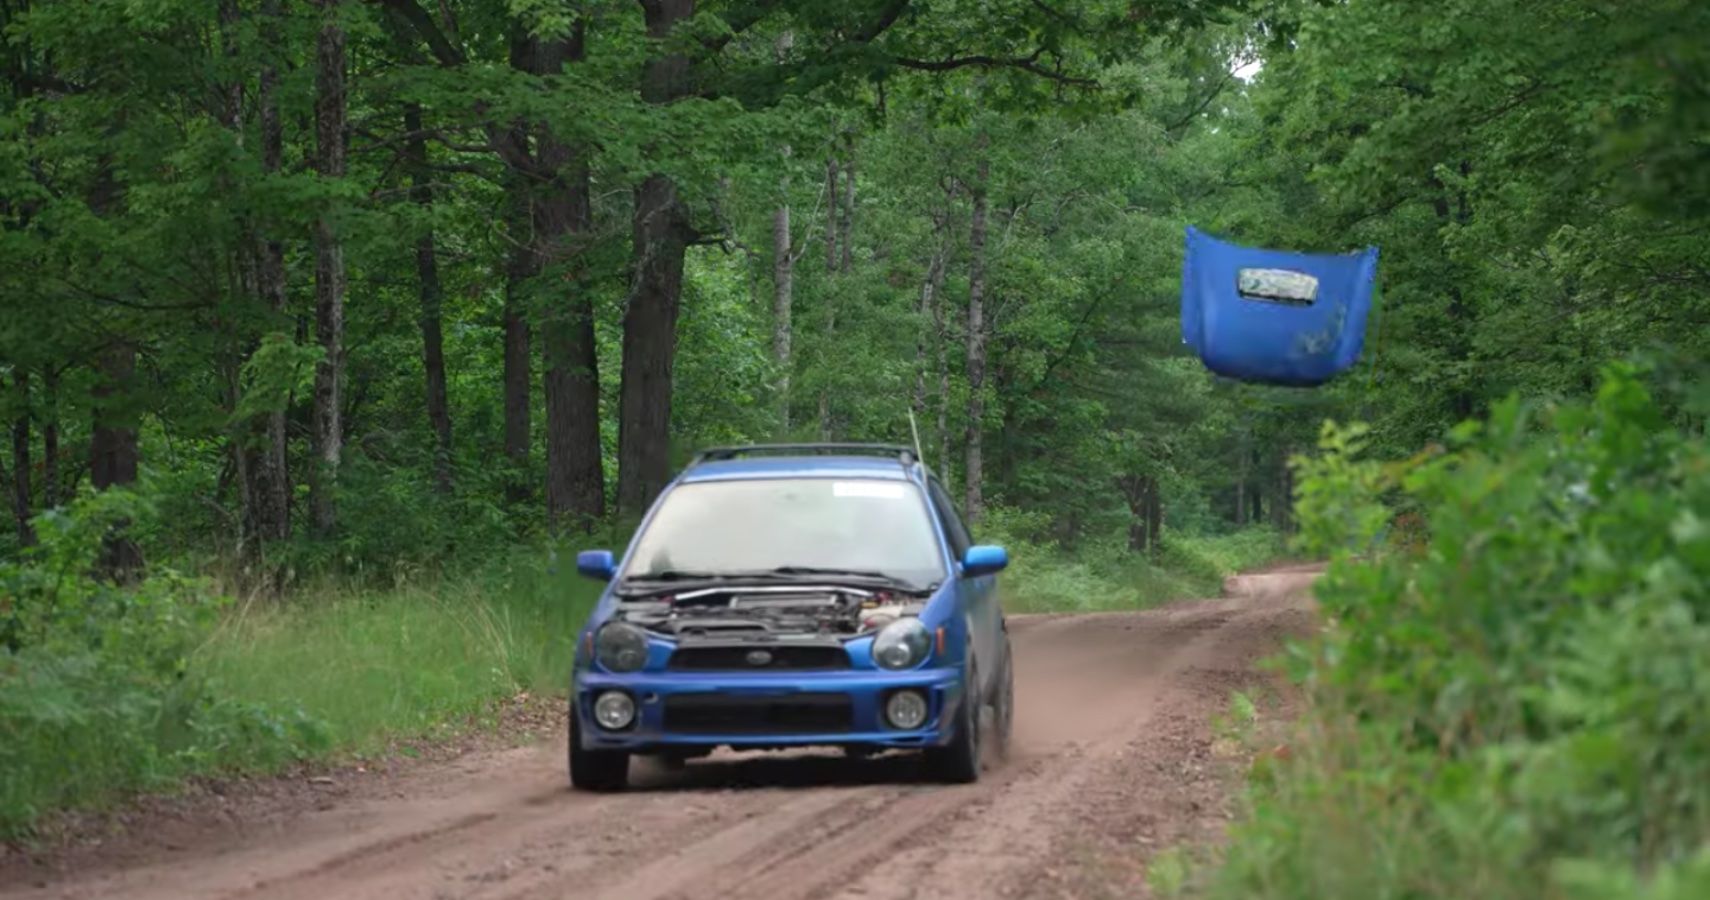 Subaru Impreza WRX rally car in blue